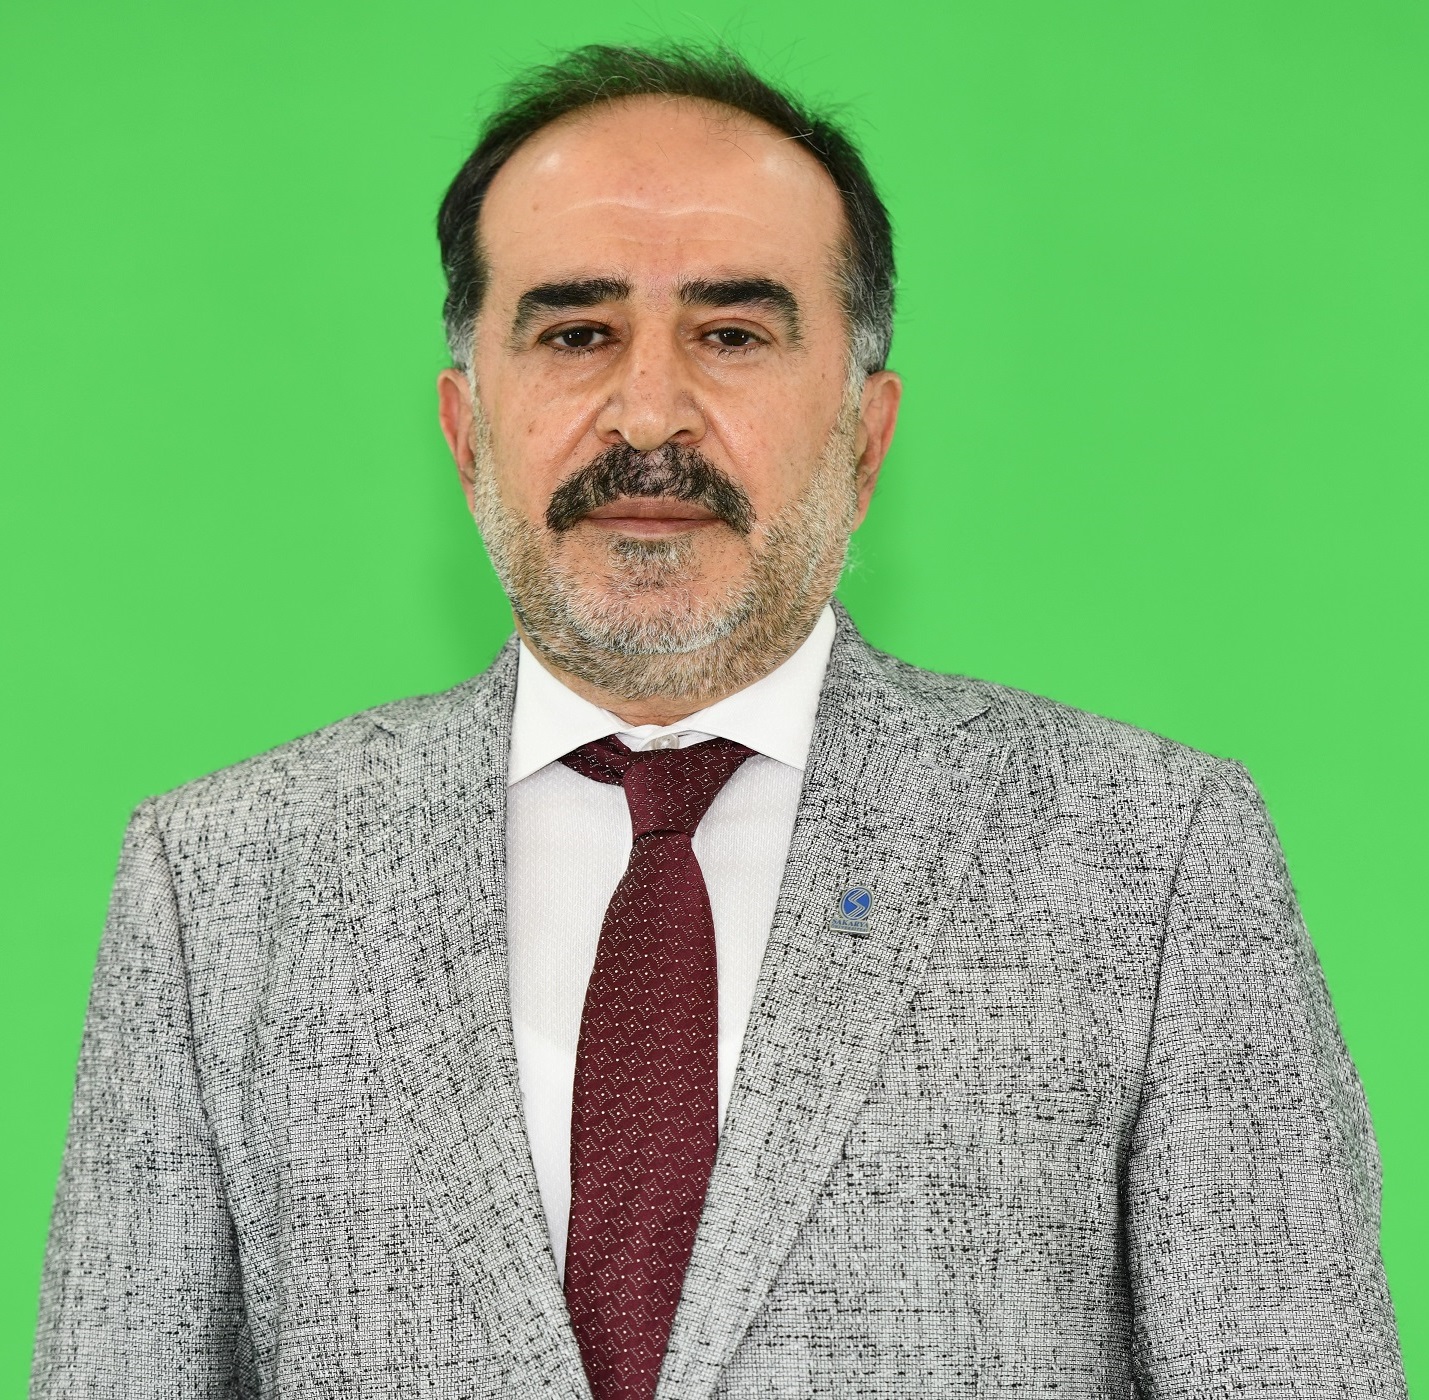 Prof. Dr. HATEM AKBULUT